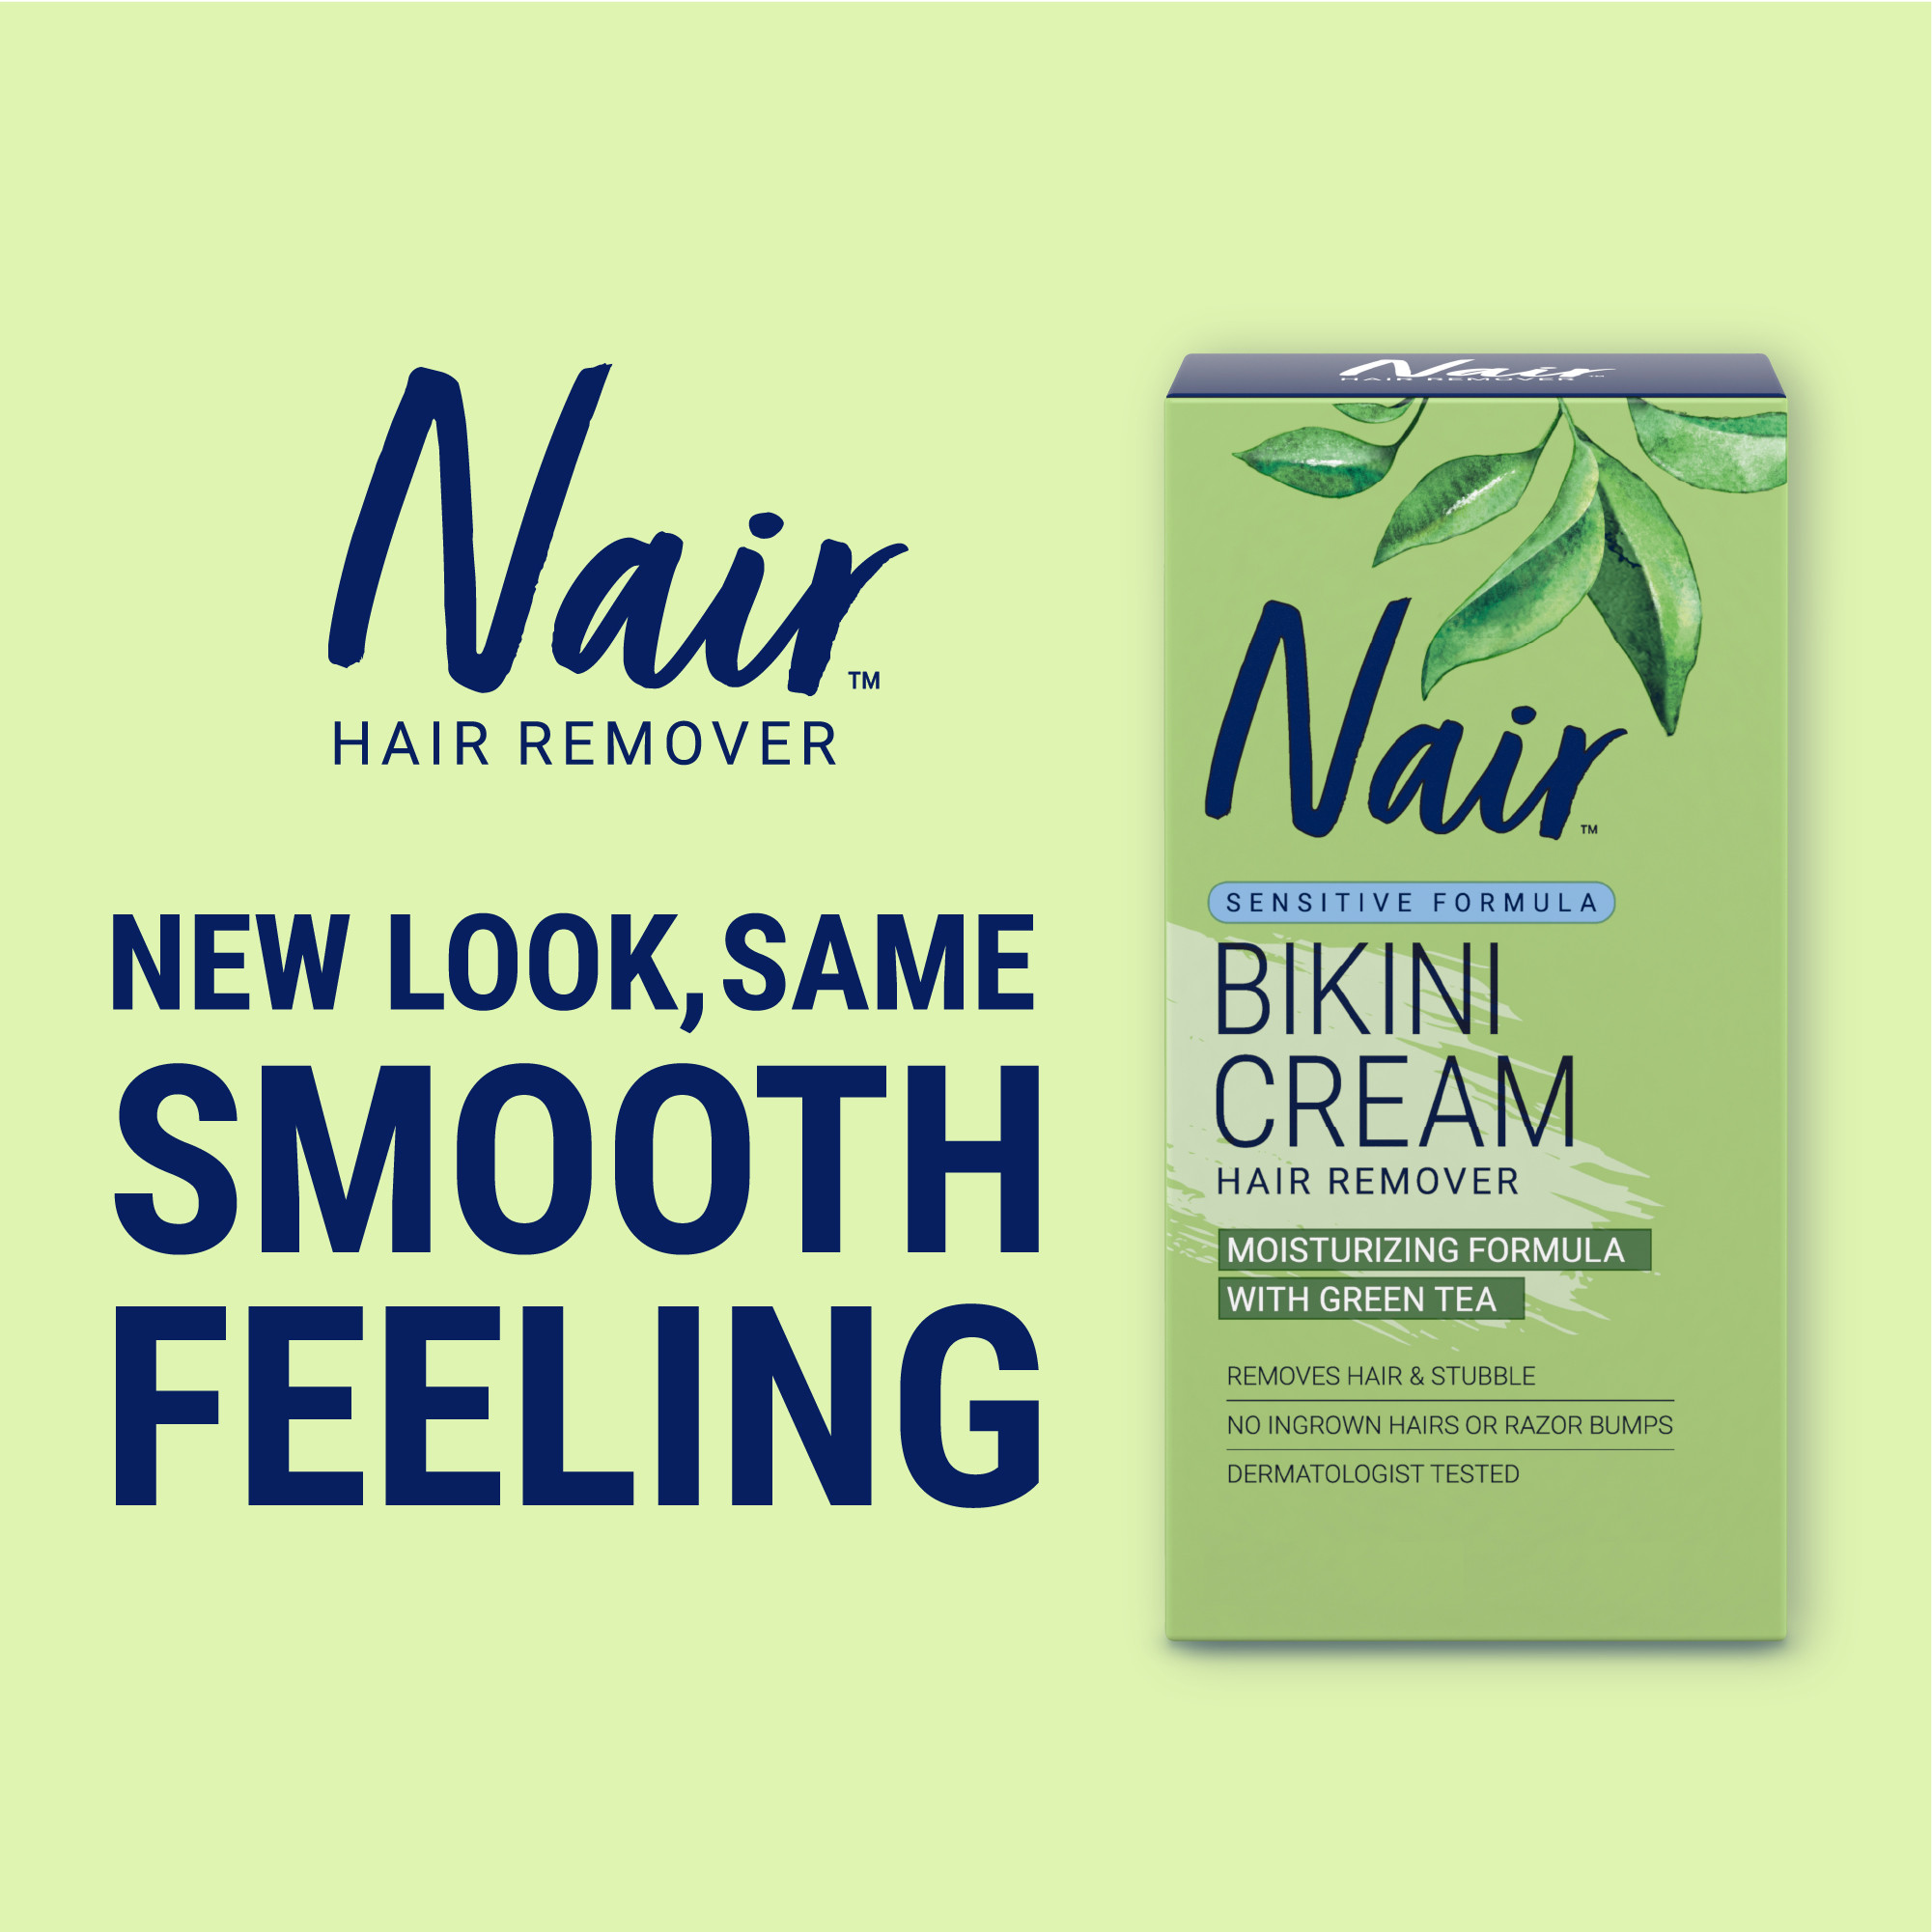 Nair Hair Remover Sensitive Formula Bikini Cream Hair Removal, 1.7 Oz Box - image 4 of 8